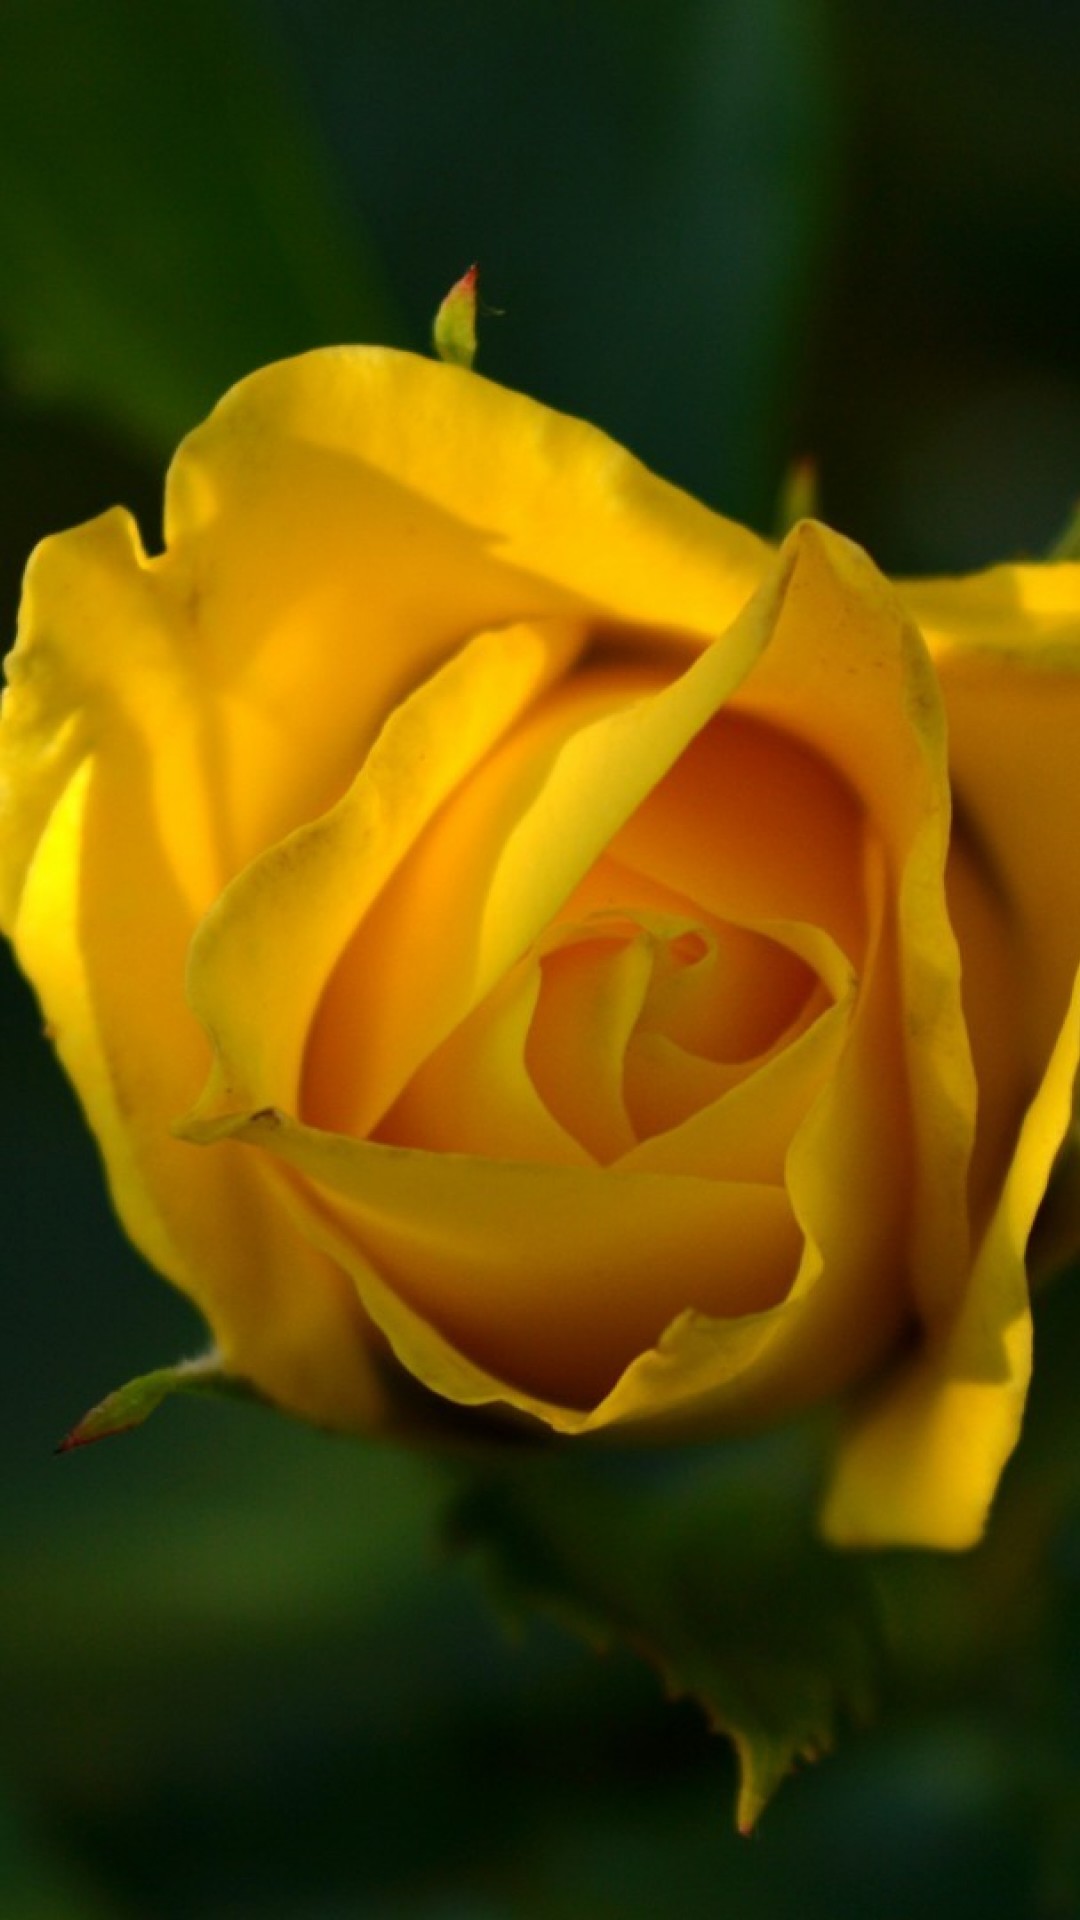 Yellow rose close-up HD Wallpaper iPhone 6 / 6S Plus - HD Wallpaper -  